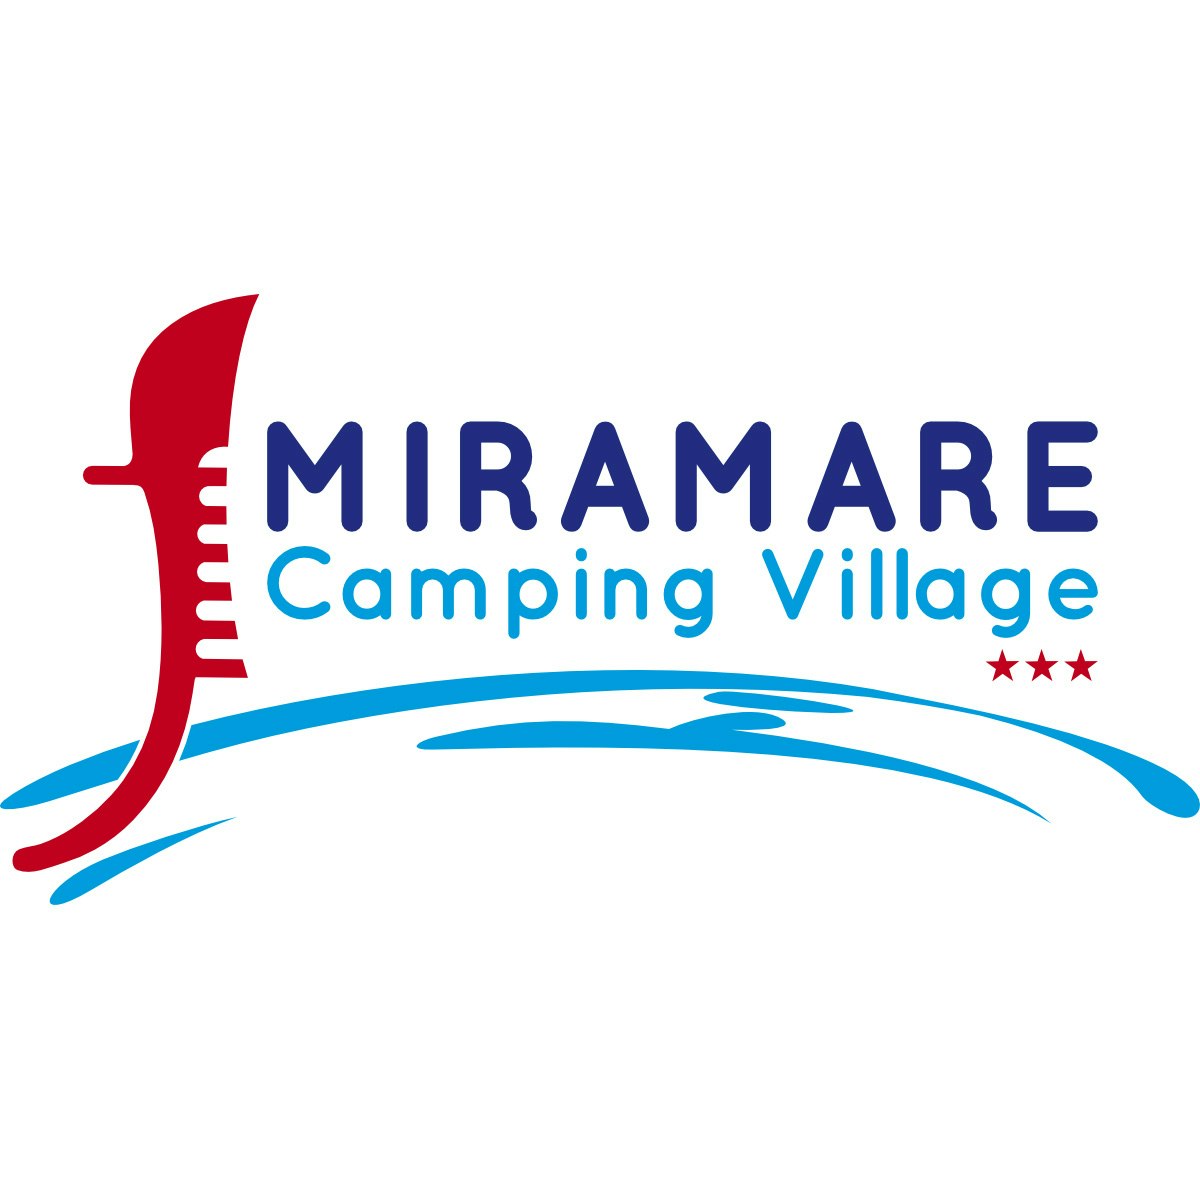 Camping Village Miramare